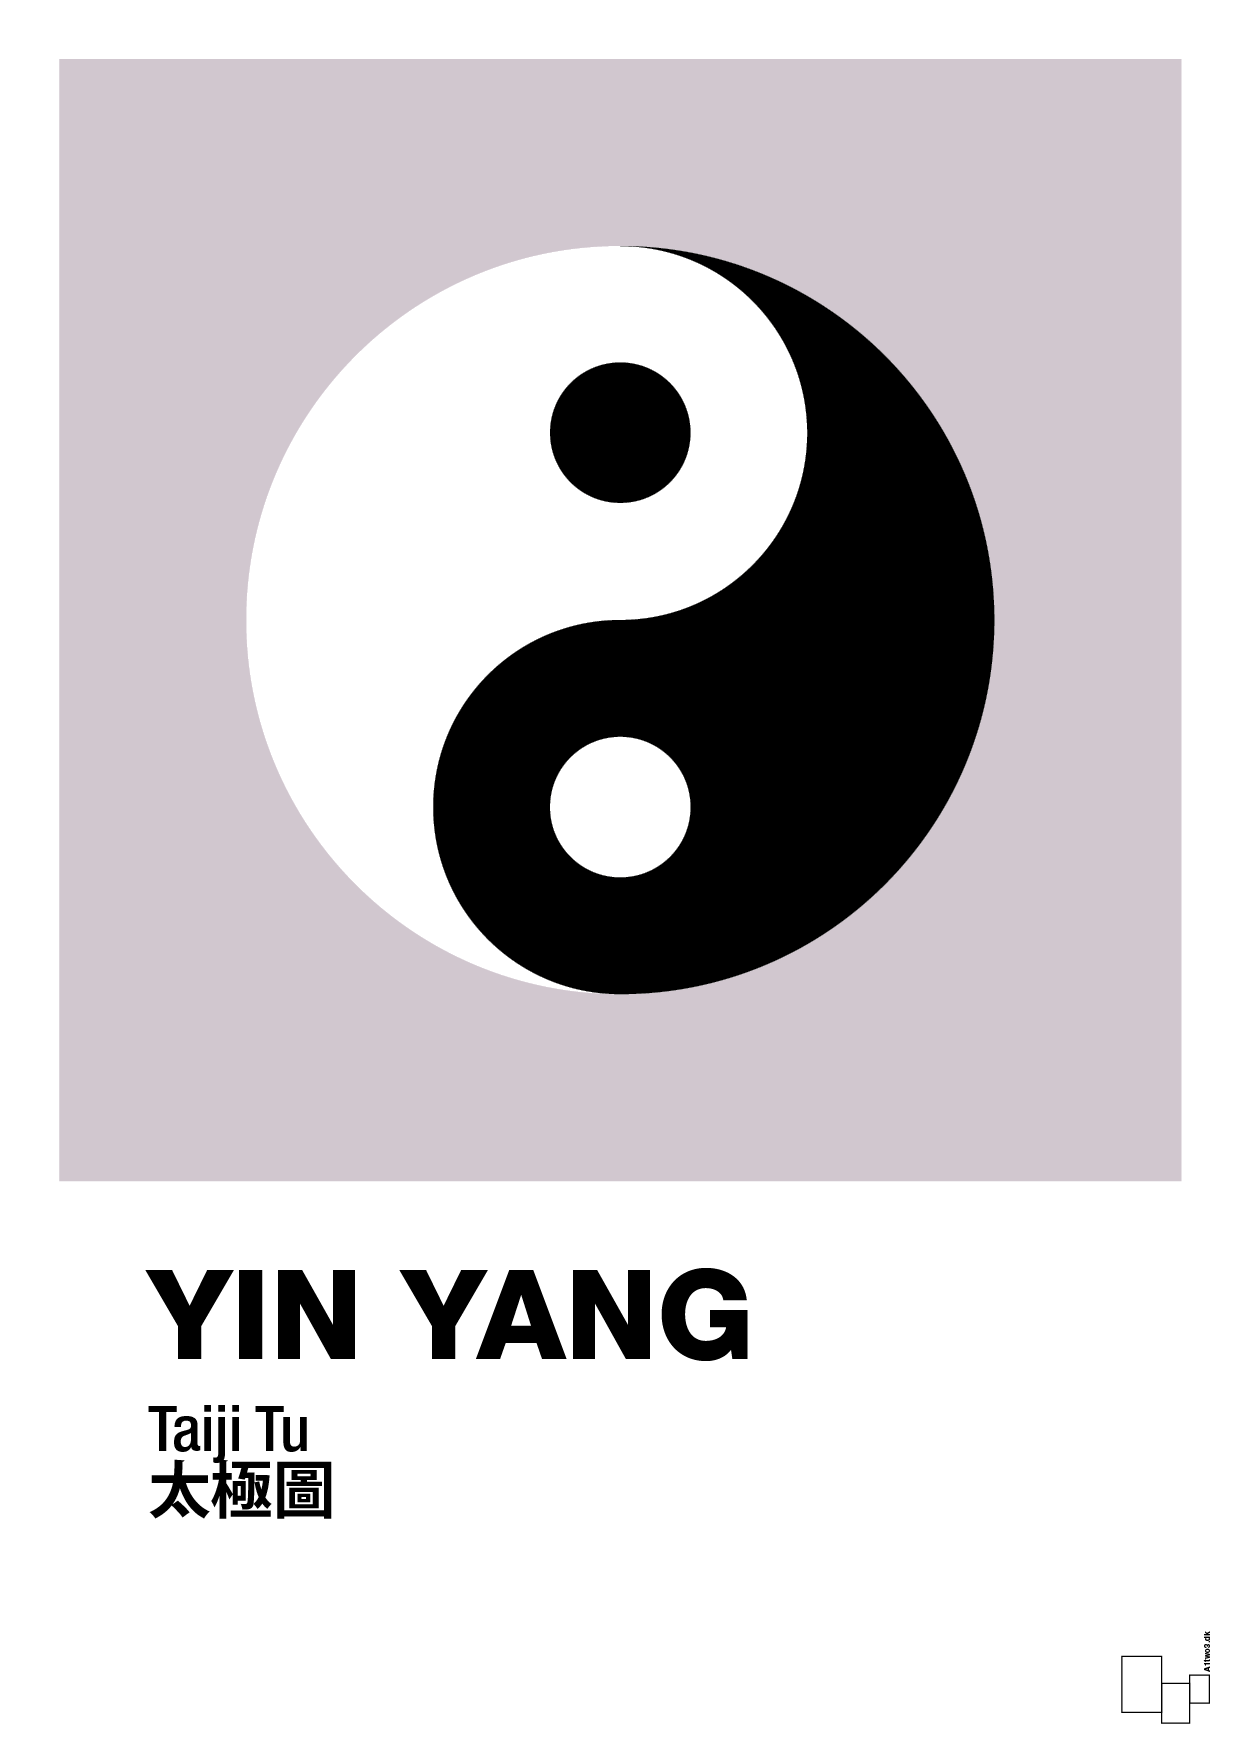 yin yang - Plakat med Videnskab i Dusty Lilac